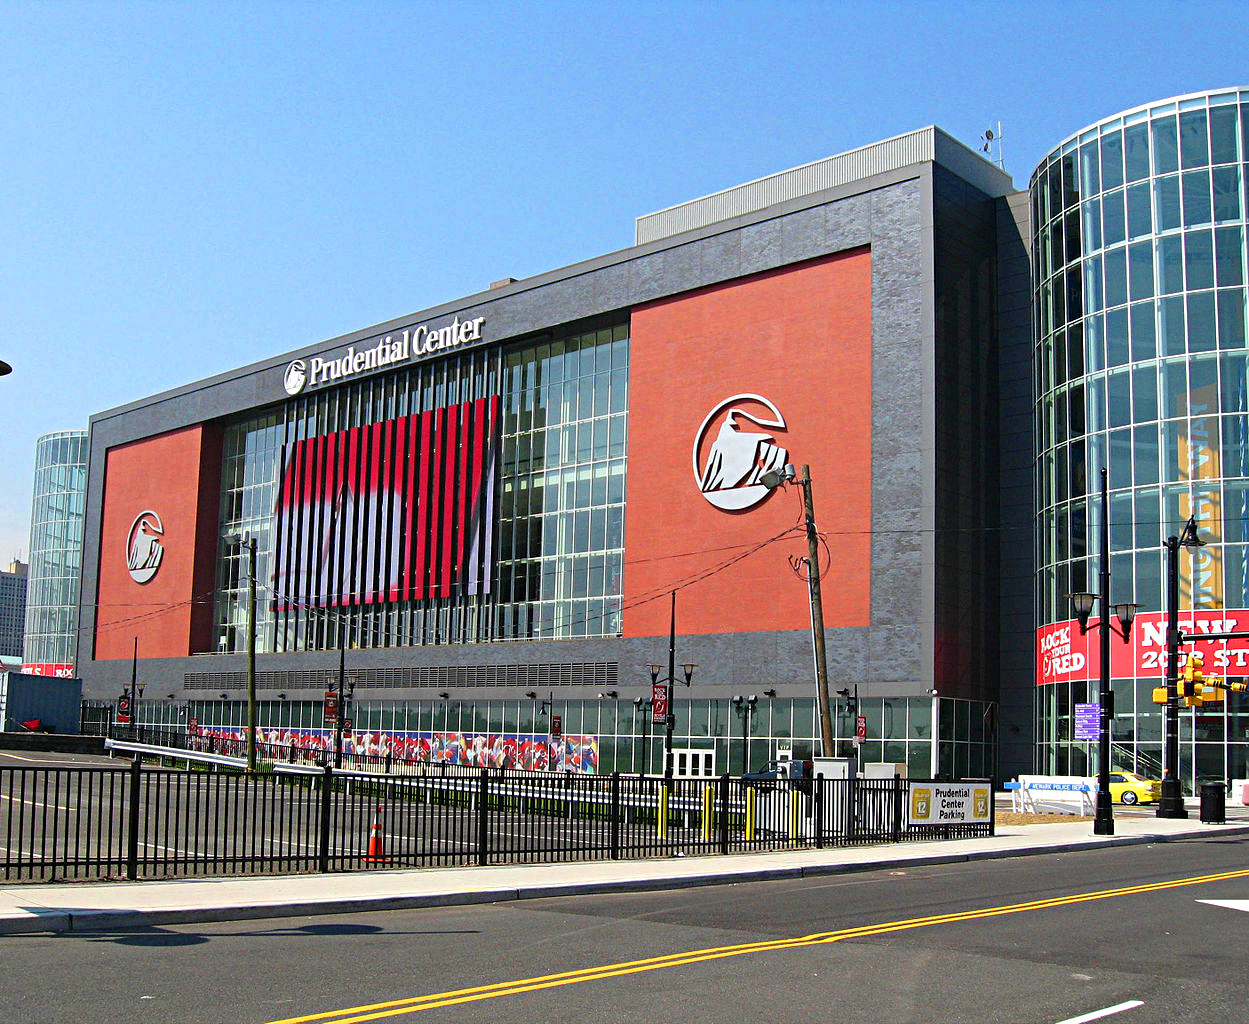 New Jersey Devils Game Parking